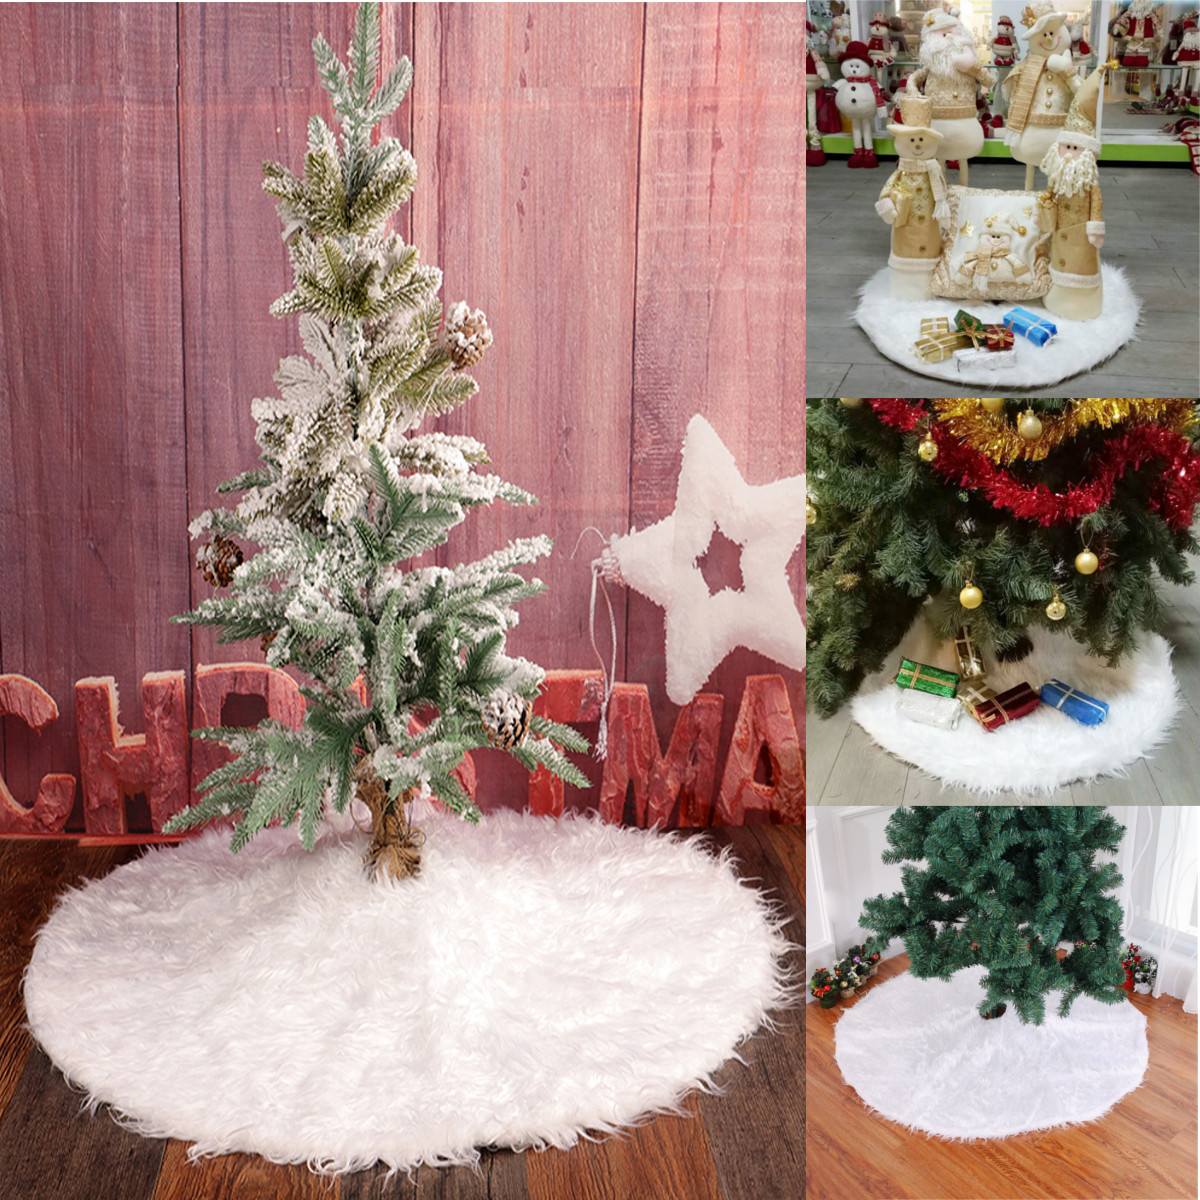 90cm-Snow-Plush-Christmas-Tree-Skirt-Base-Floor-Mat-Cover-Christmas-Party-Decorations-1376070-1